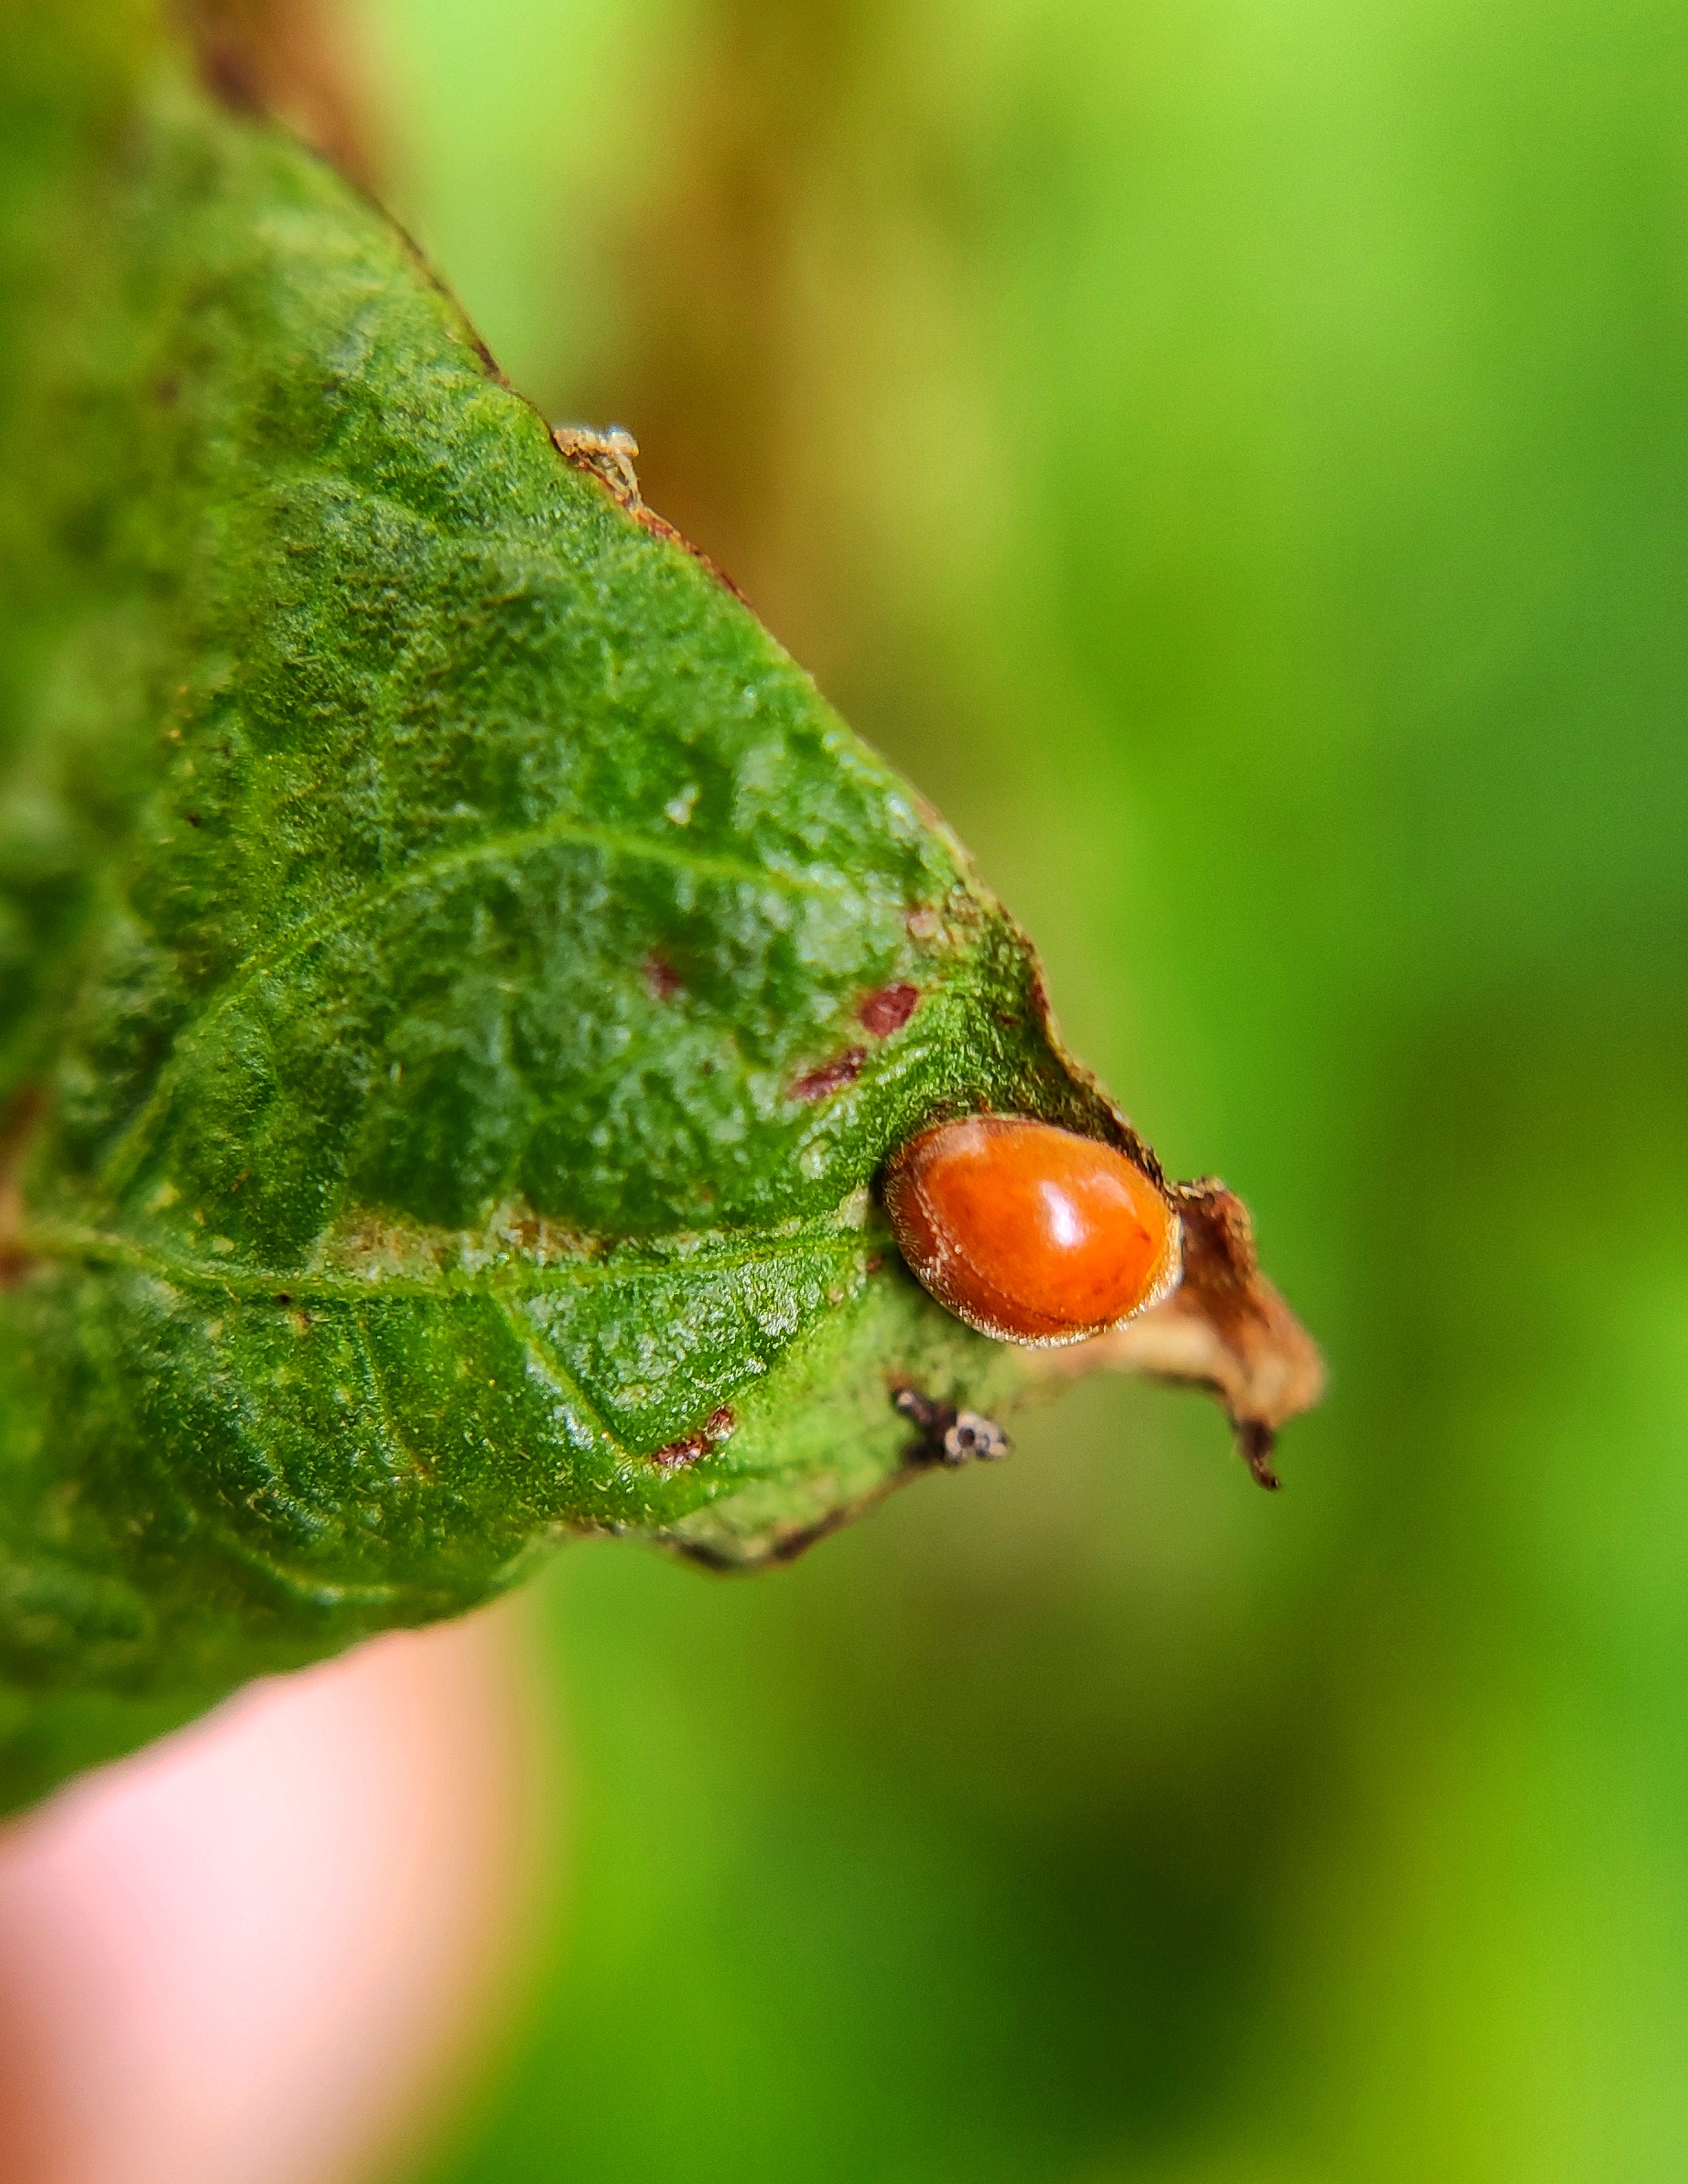 Bug on plant leaf